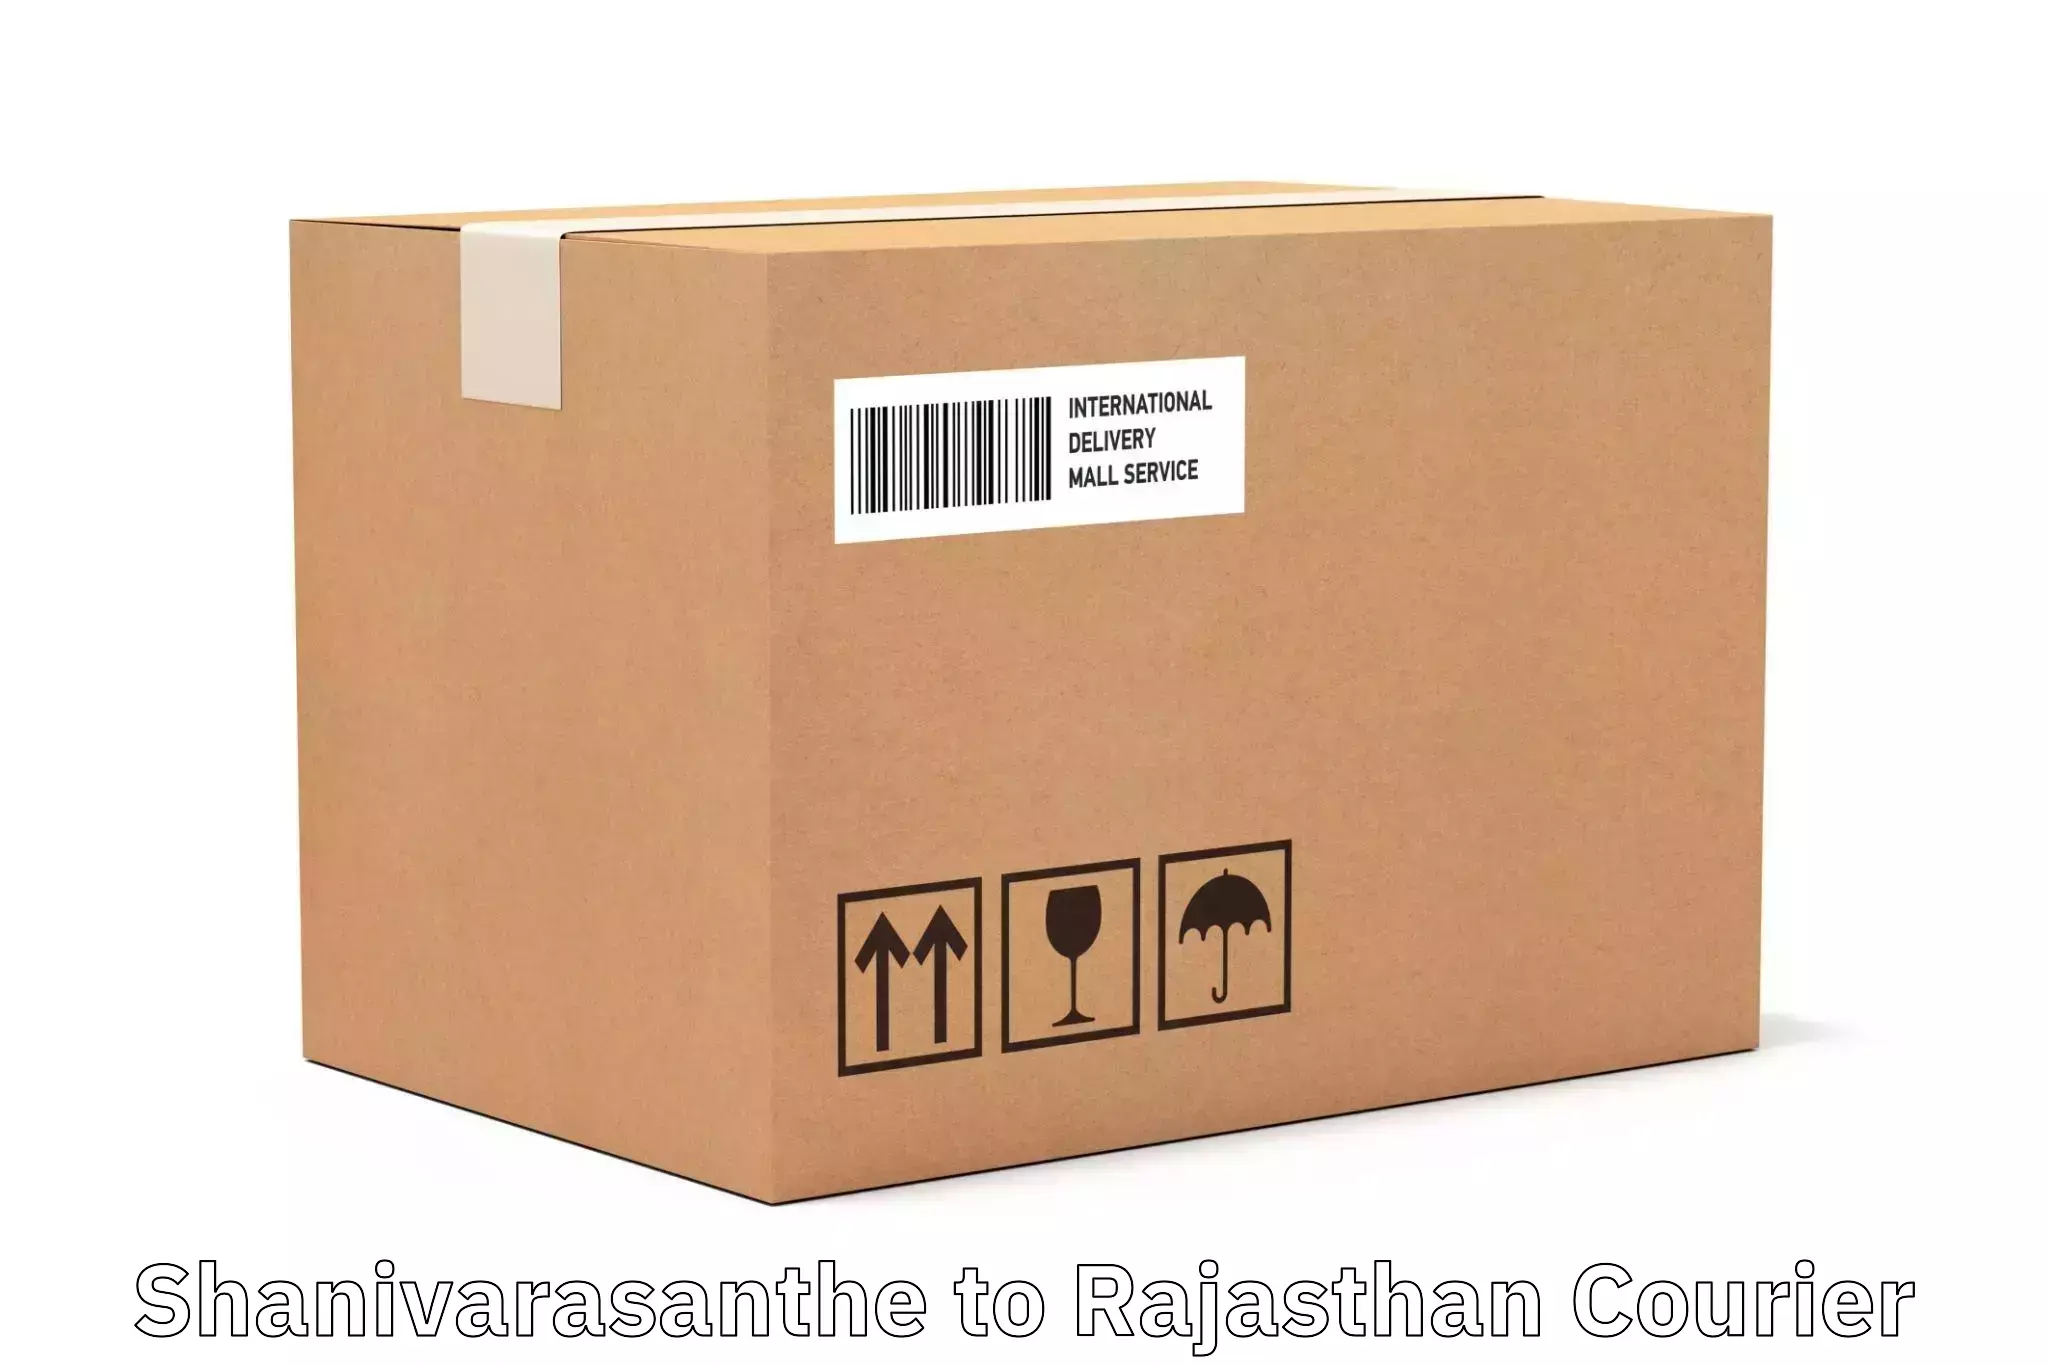 Global shipping networks Shanivarasanthe to Rajsamand